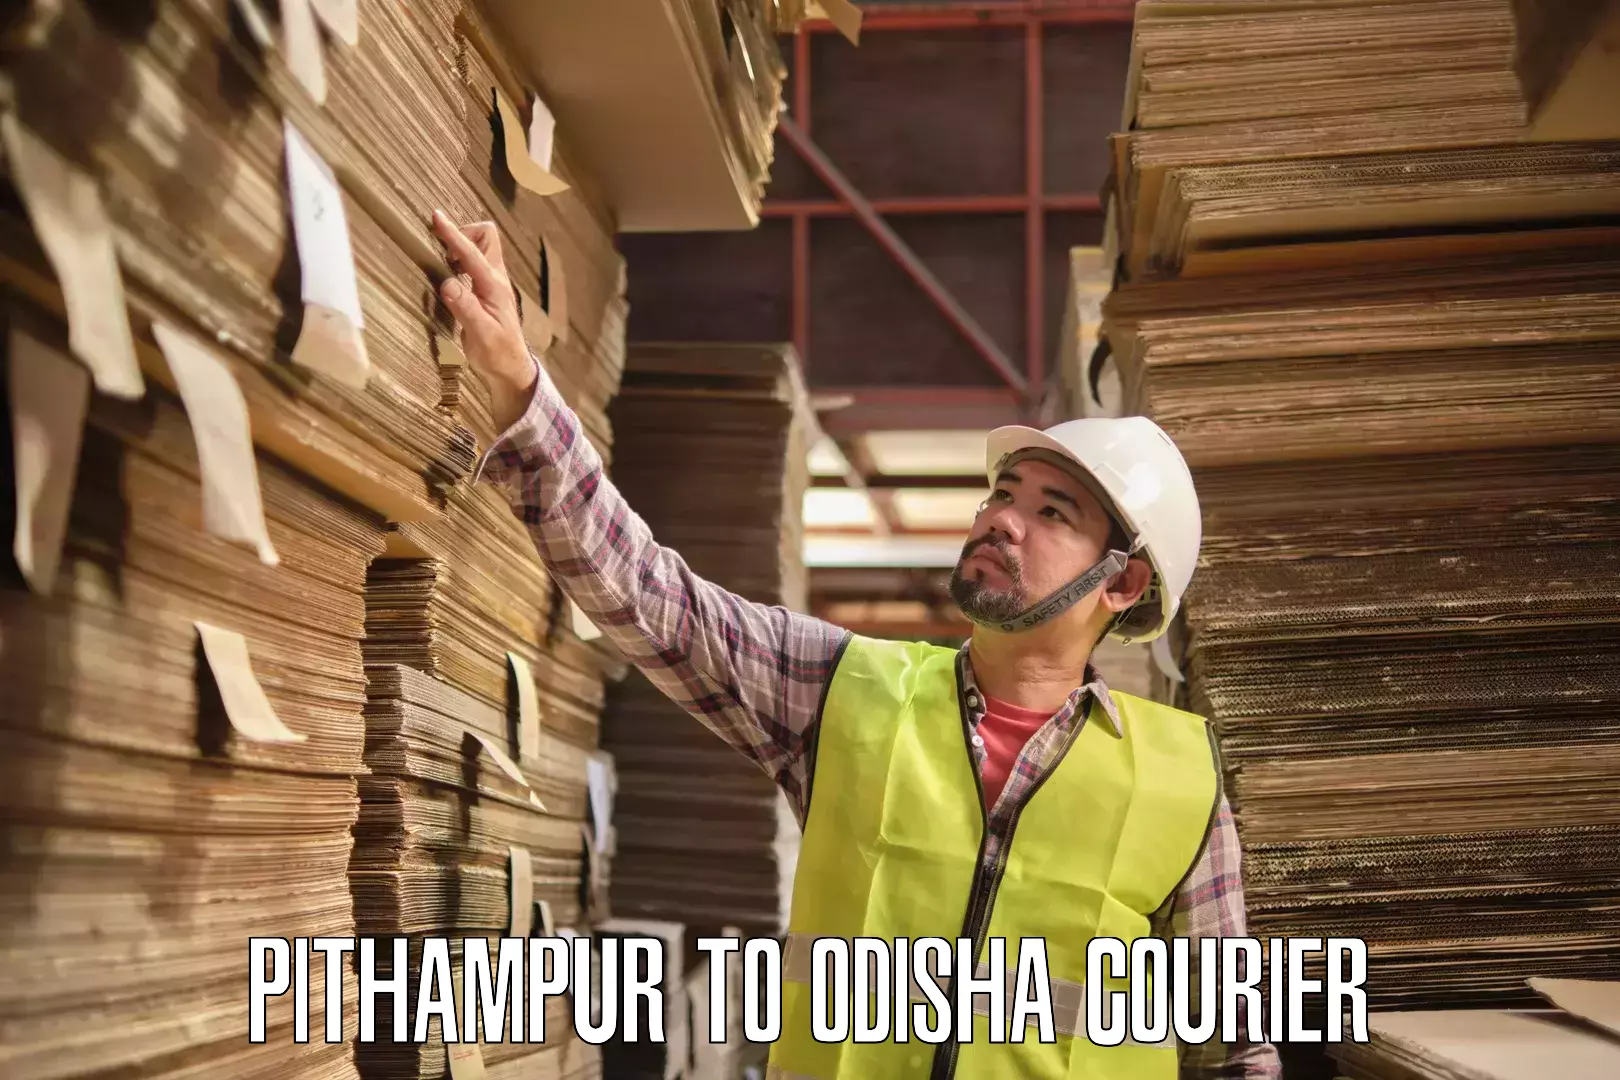 Courier service innovation Pithampur to Siksha O Anusandhan Bhubaneswar